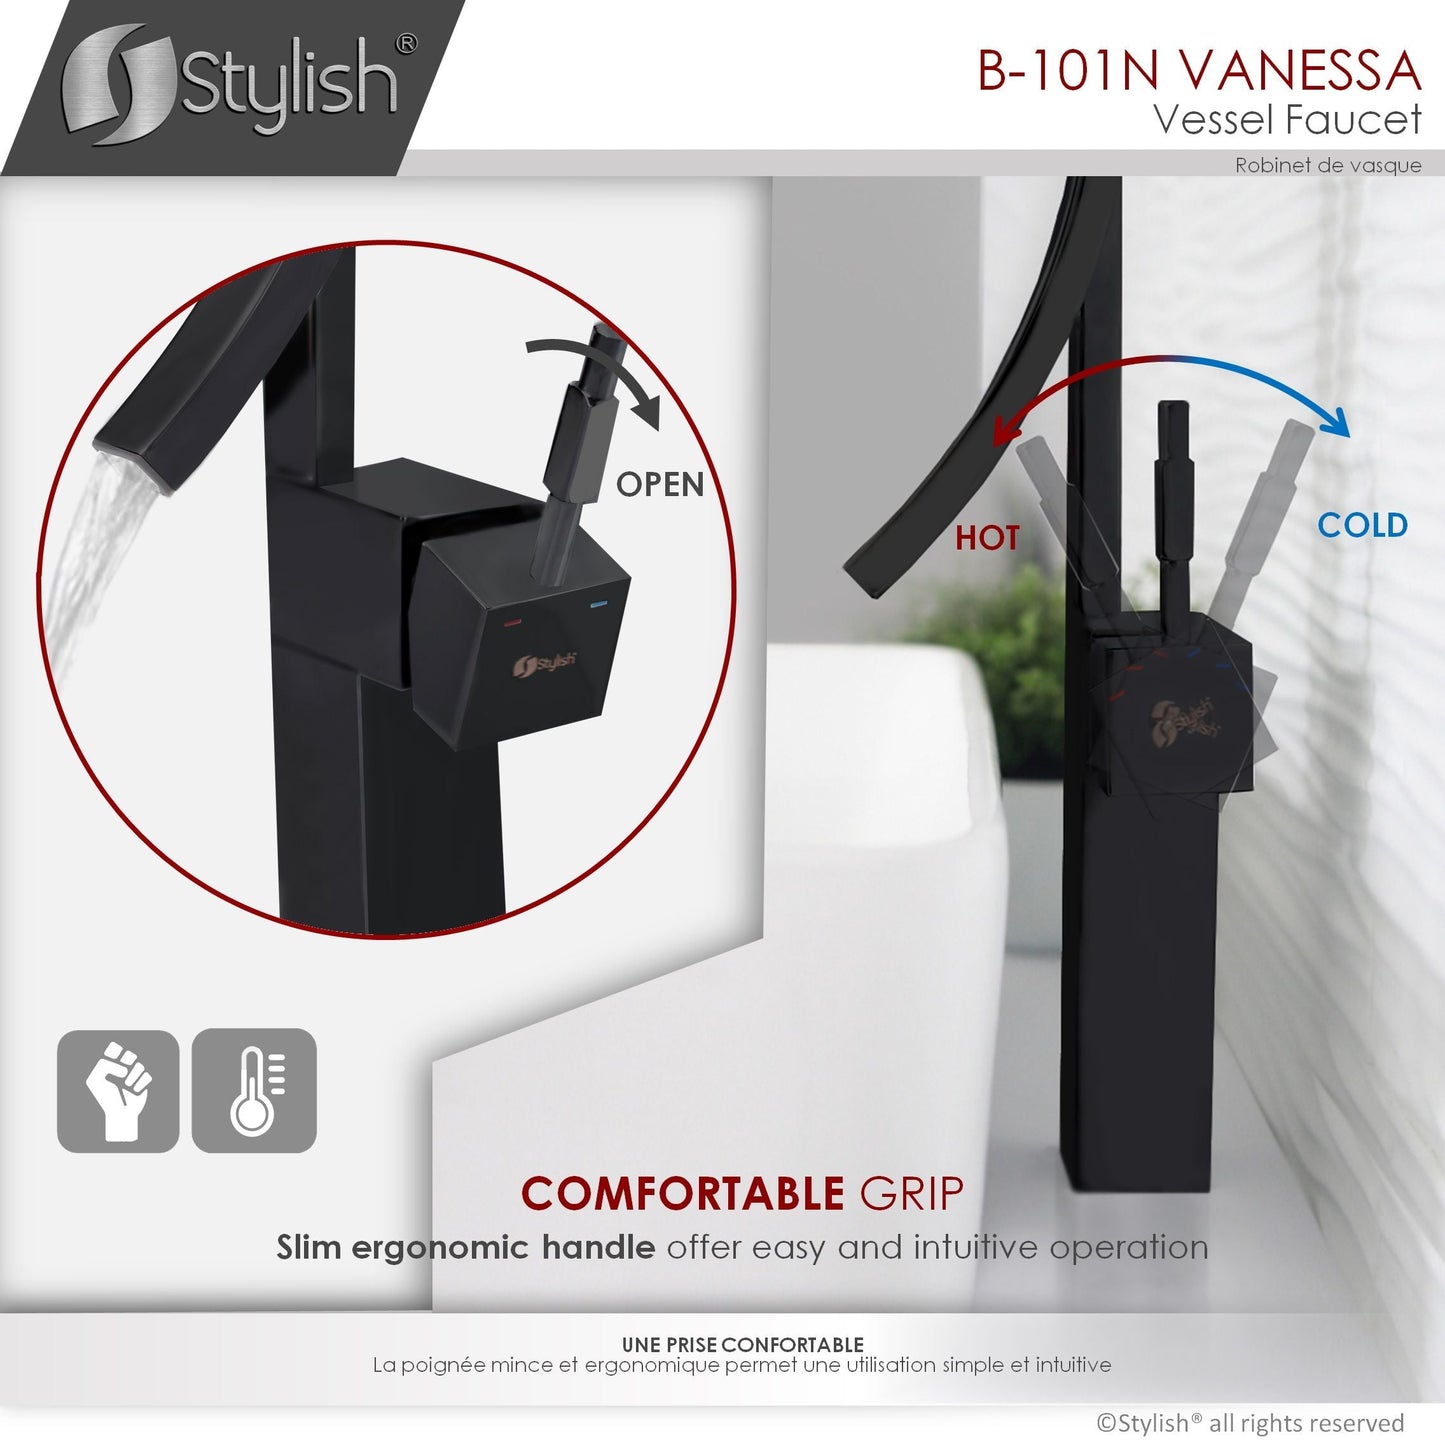 Stylish Vanessa 17.5" Bathroom Faucet Single Handle Matte Black Finish B-101N